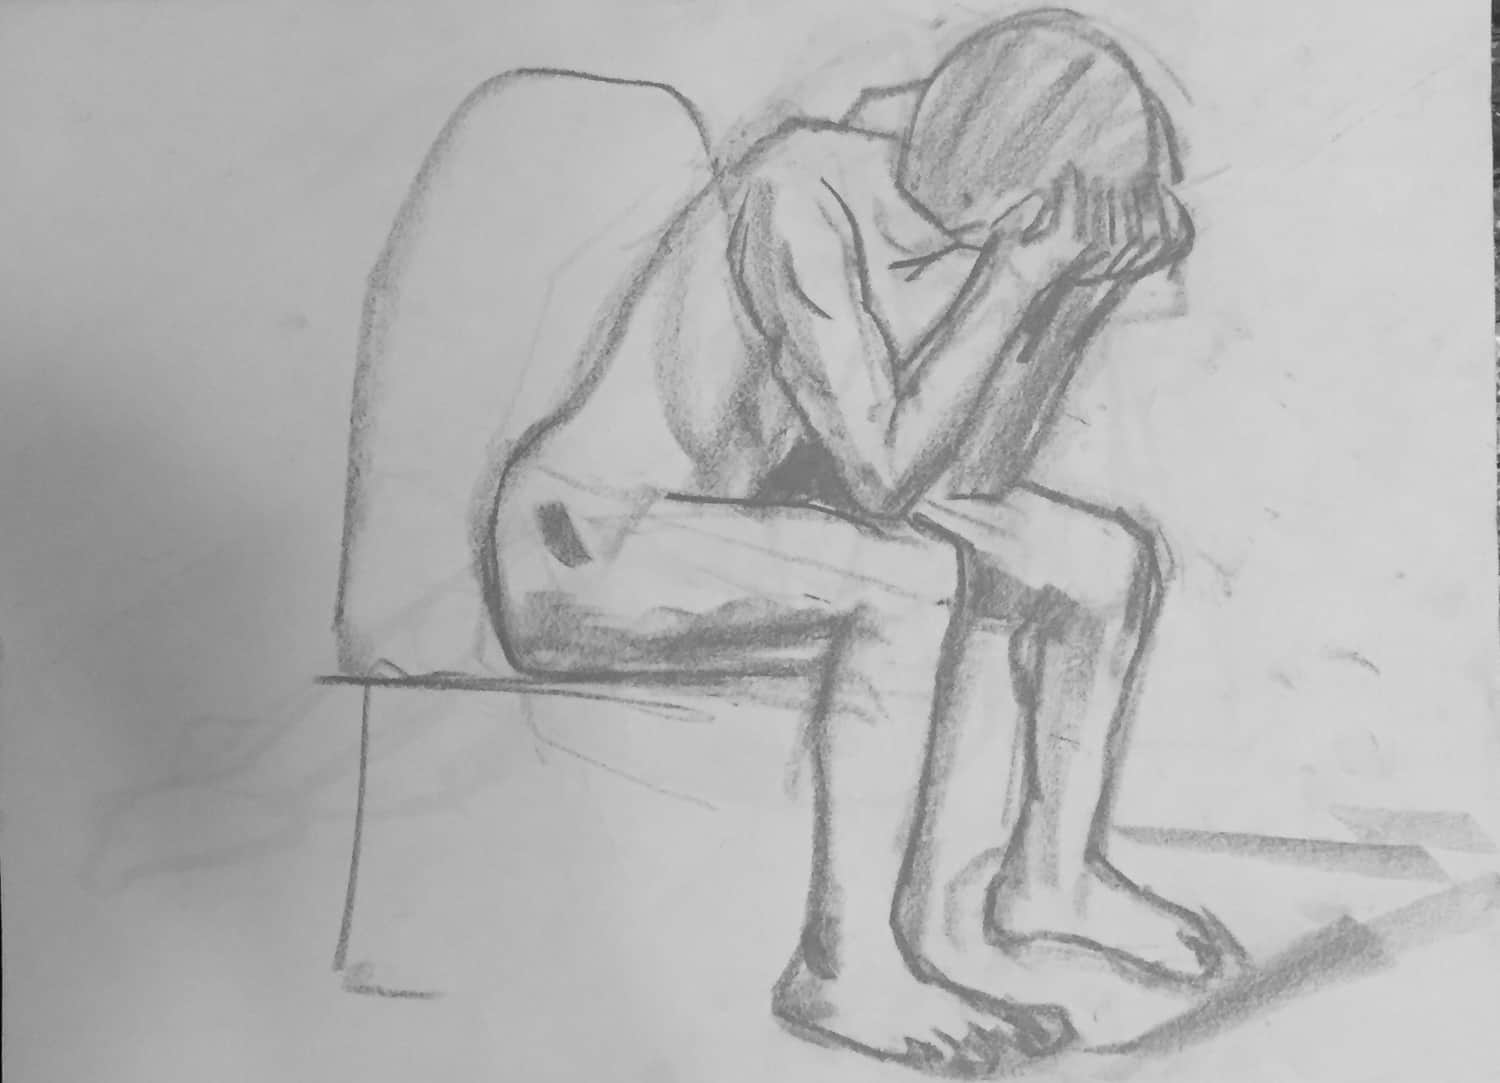 Dejected, Figure Drawings